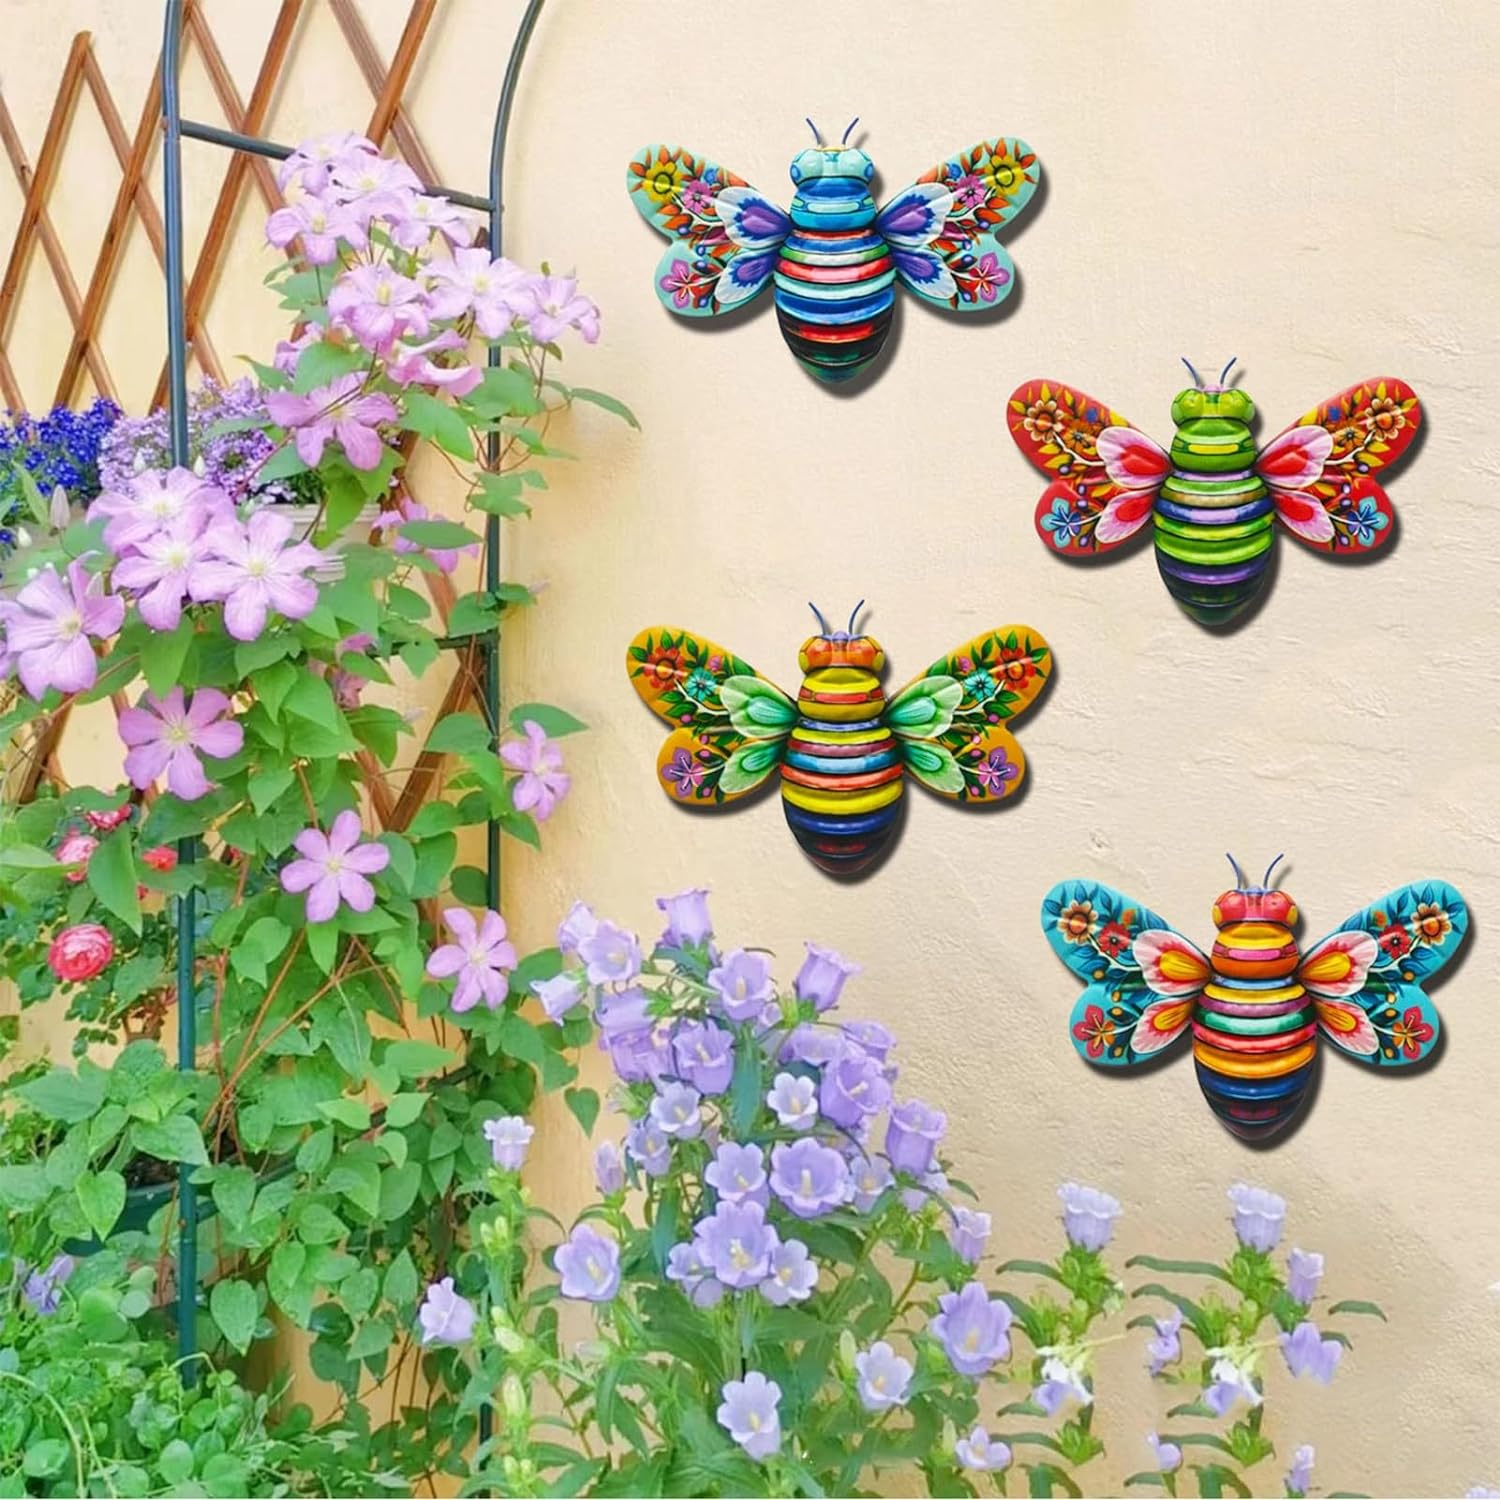 Lron Bee Art Garden Wall Hanging